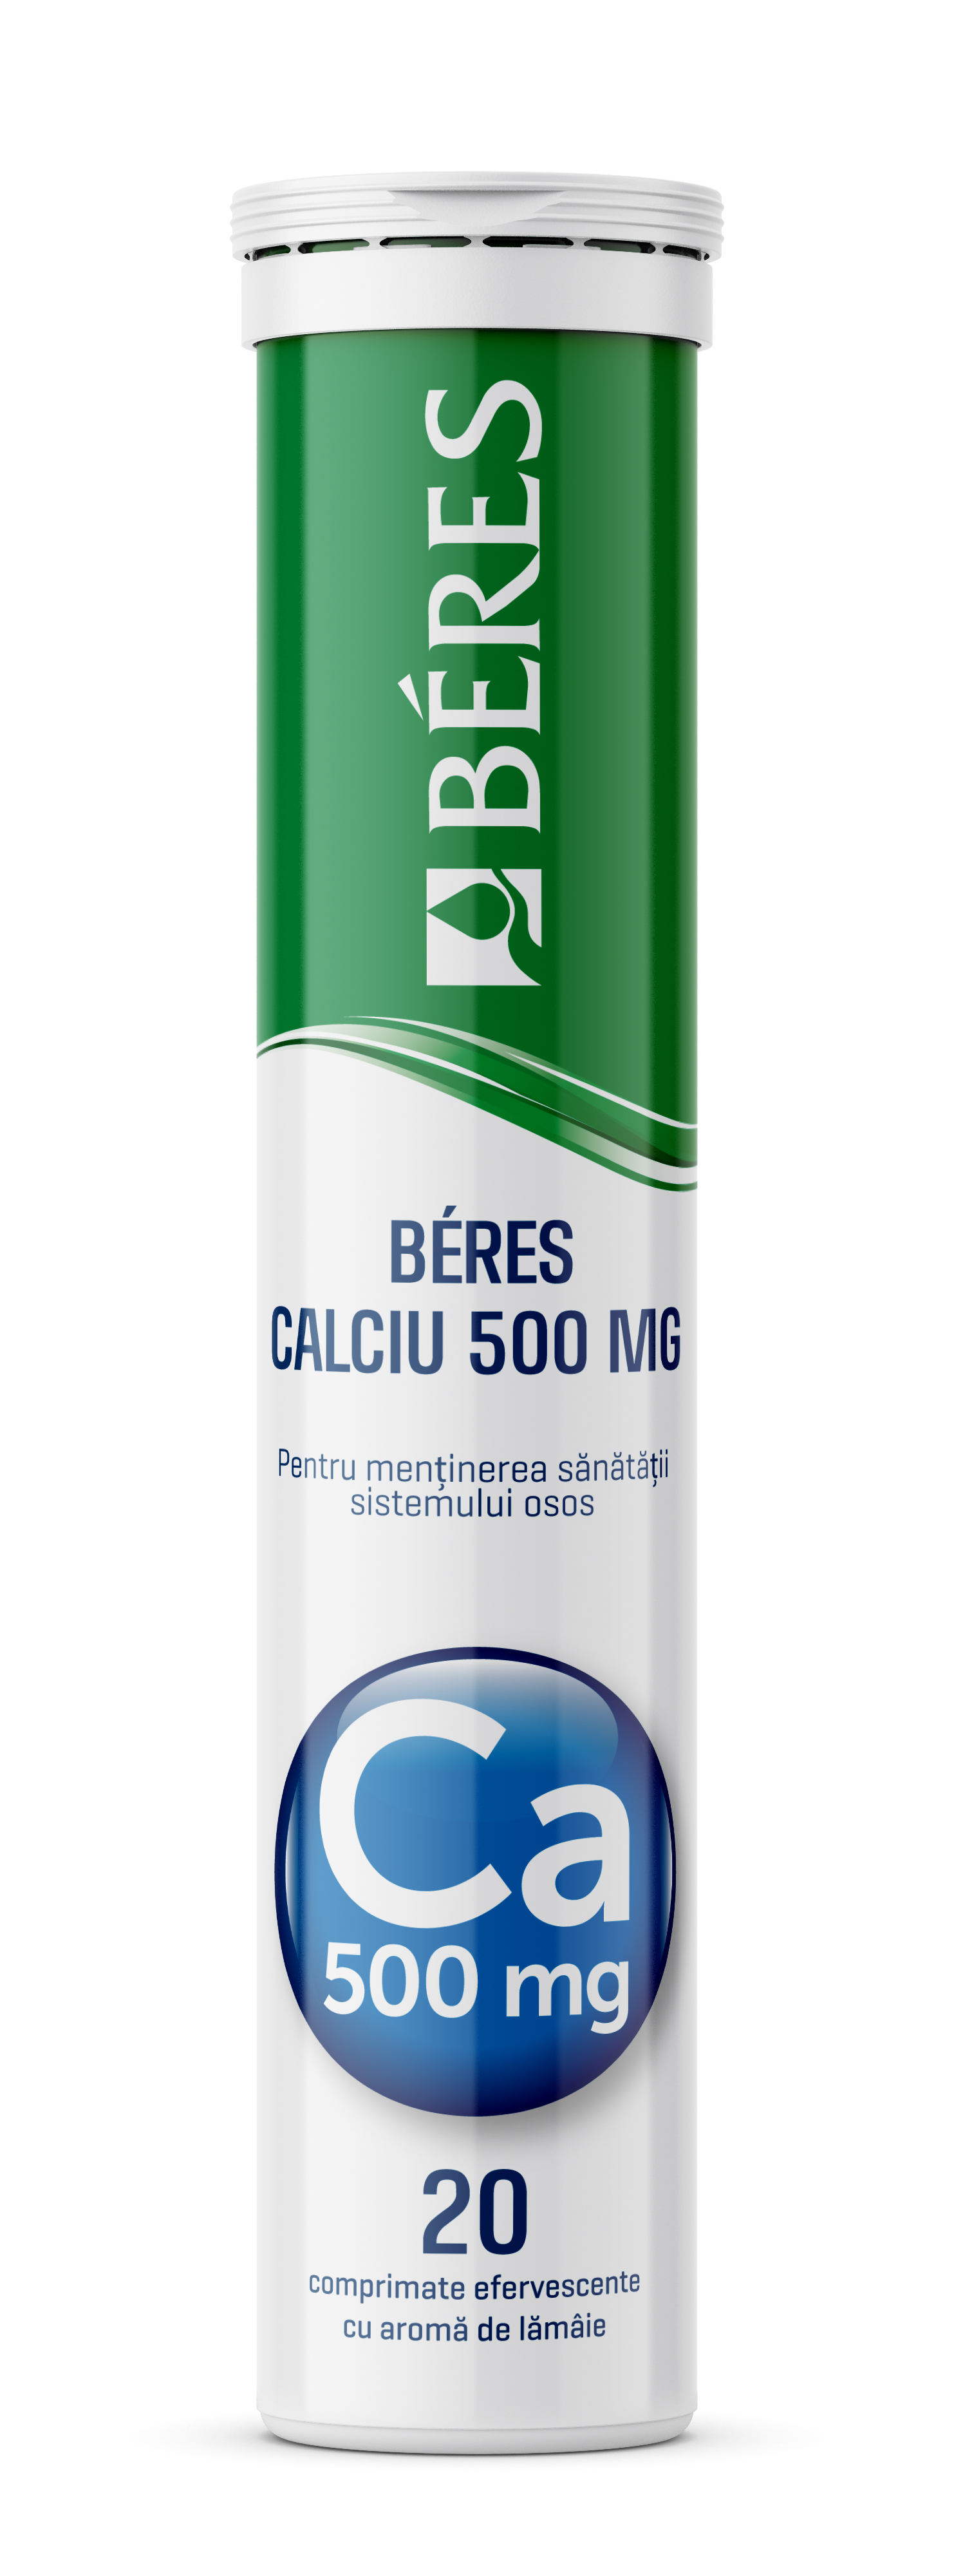 Calciu 500mg, 20 comprimate efervescente, Beres Pharmaceuticals Co